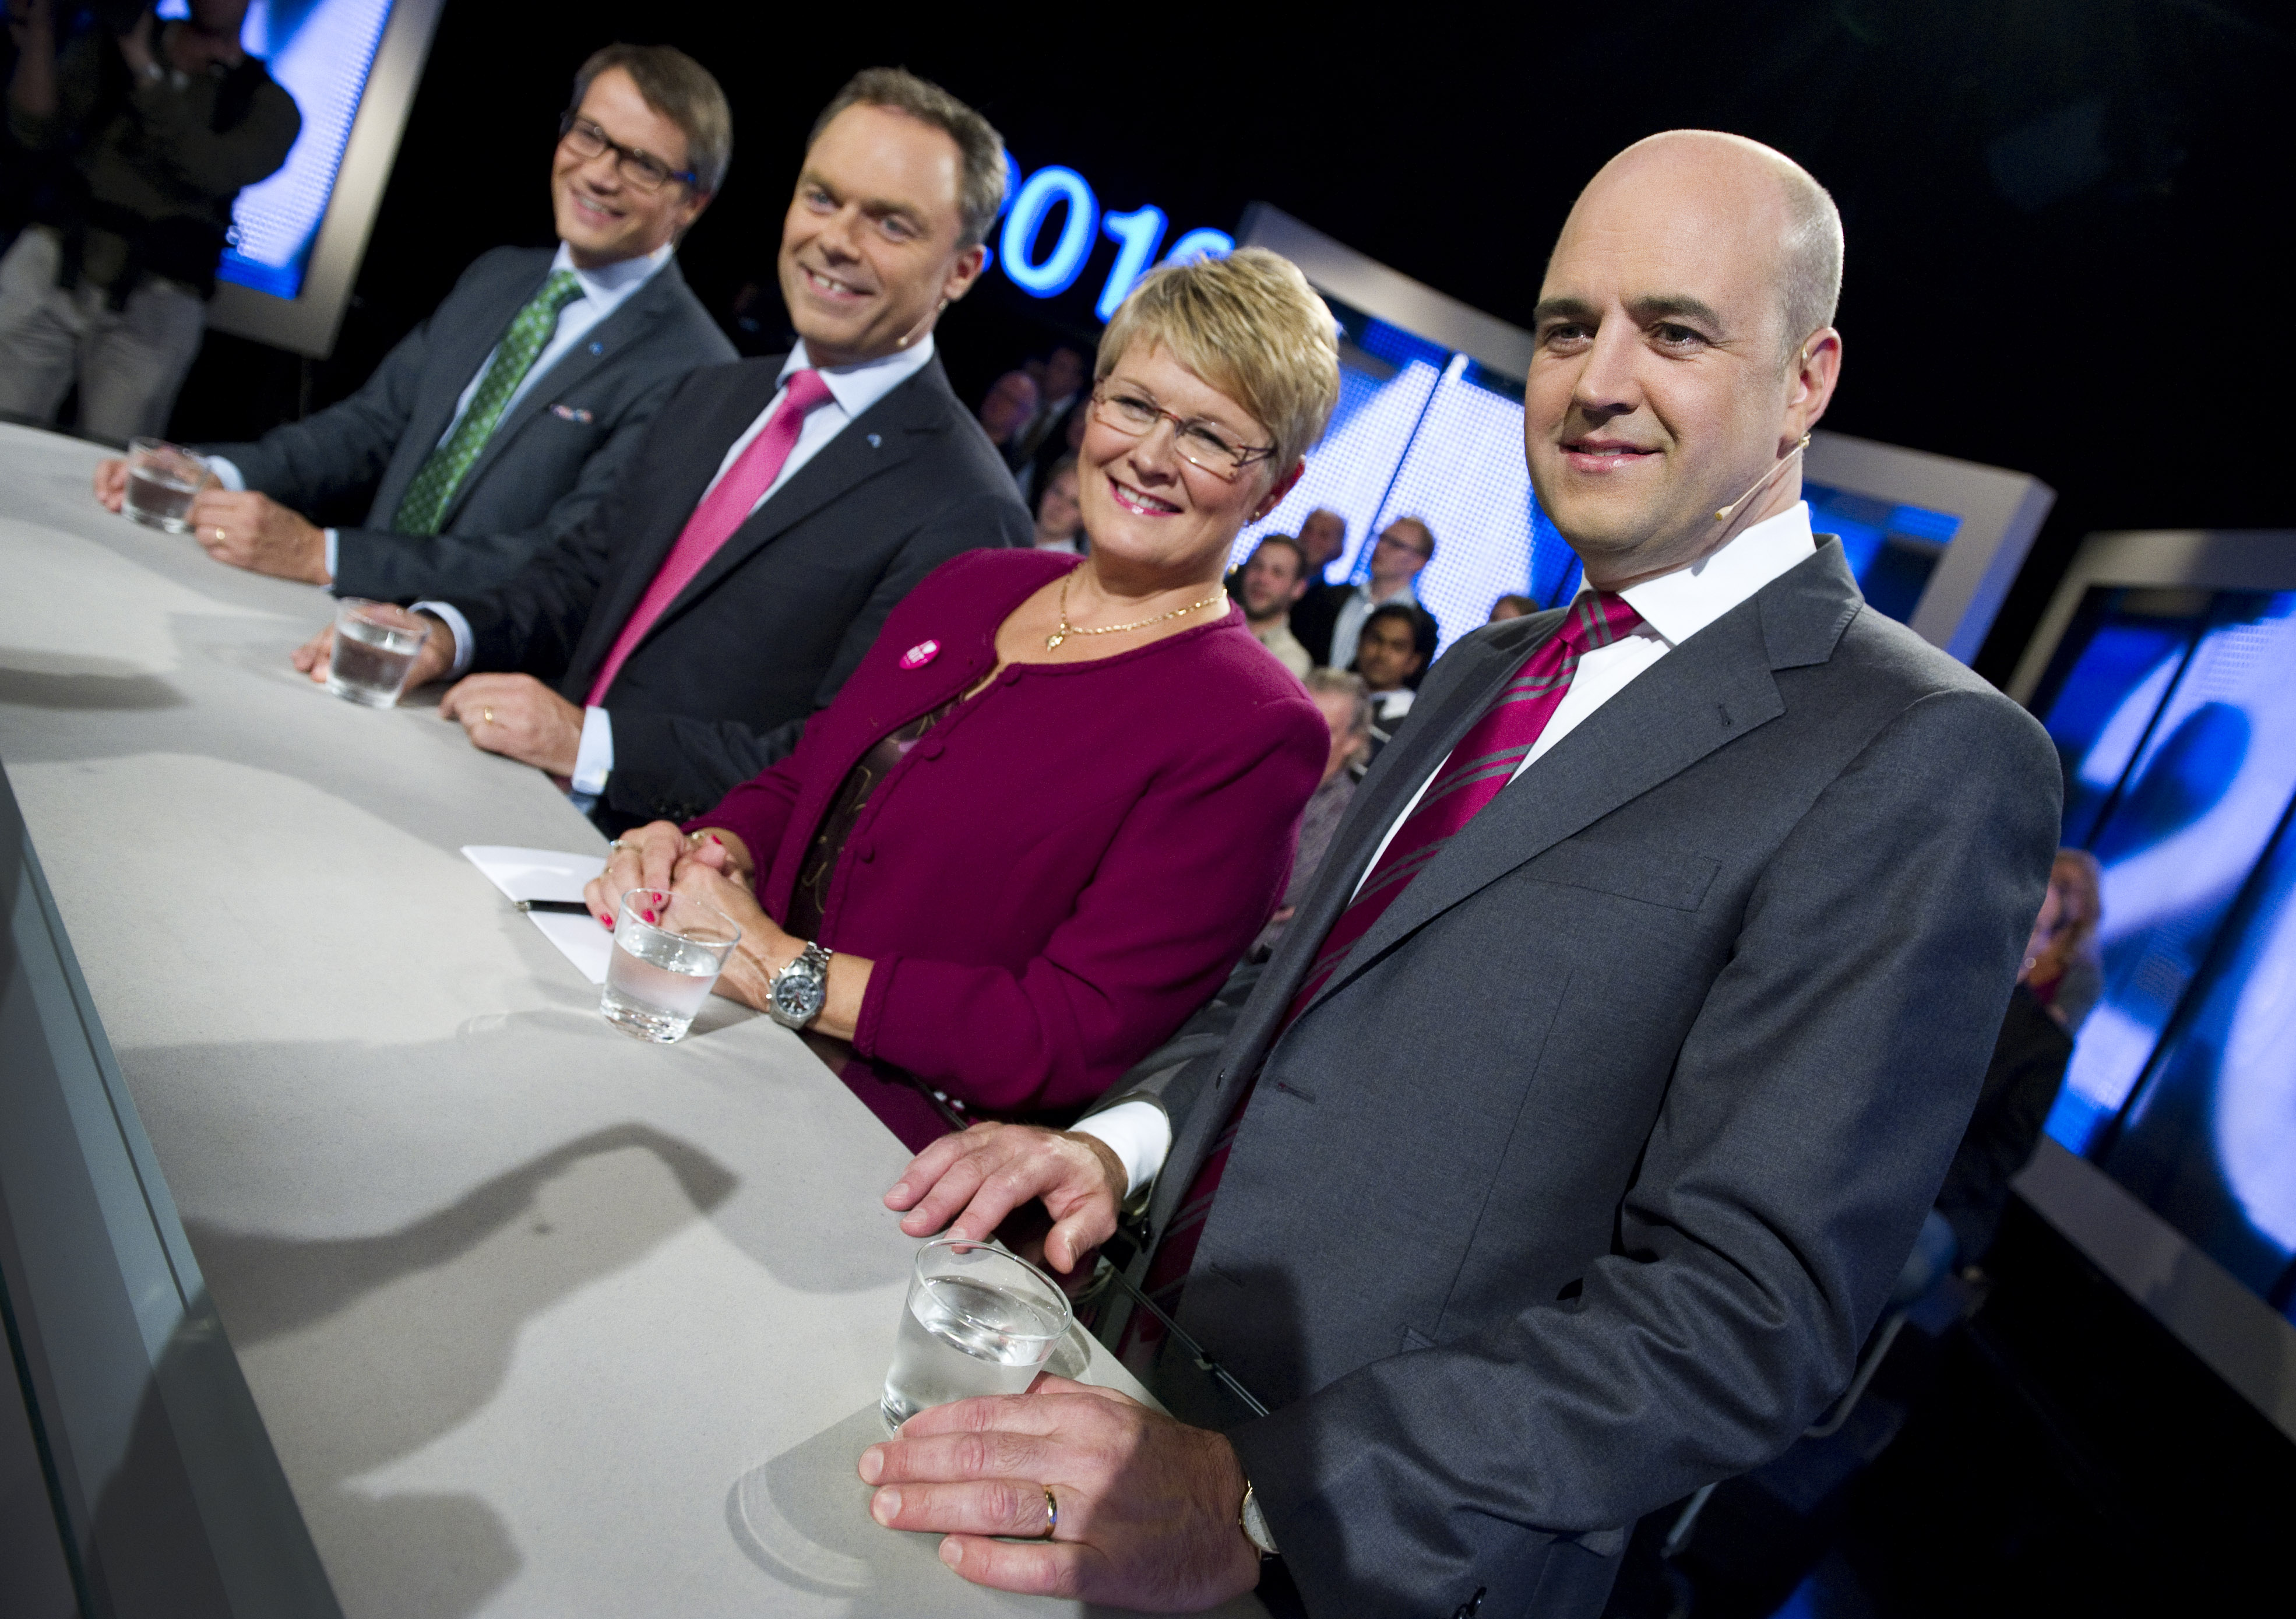 Fredrik Reinfeldt, Riksdagsvalet 2010, Alliansen, Partiledarutfrågning, Jenny Östergren, TV4, Jan Björklund, Malou von Sivers